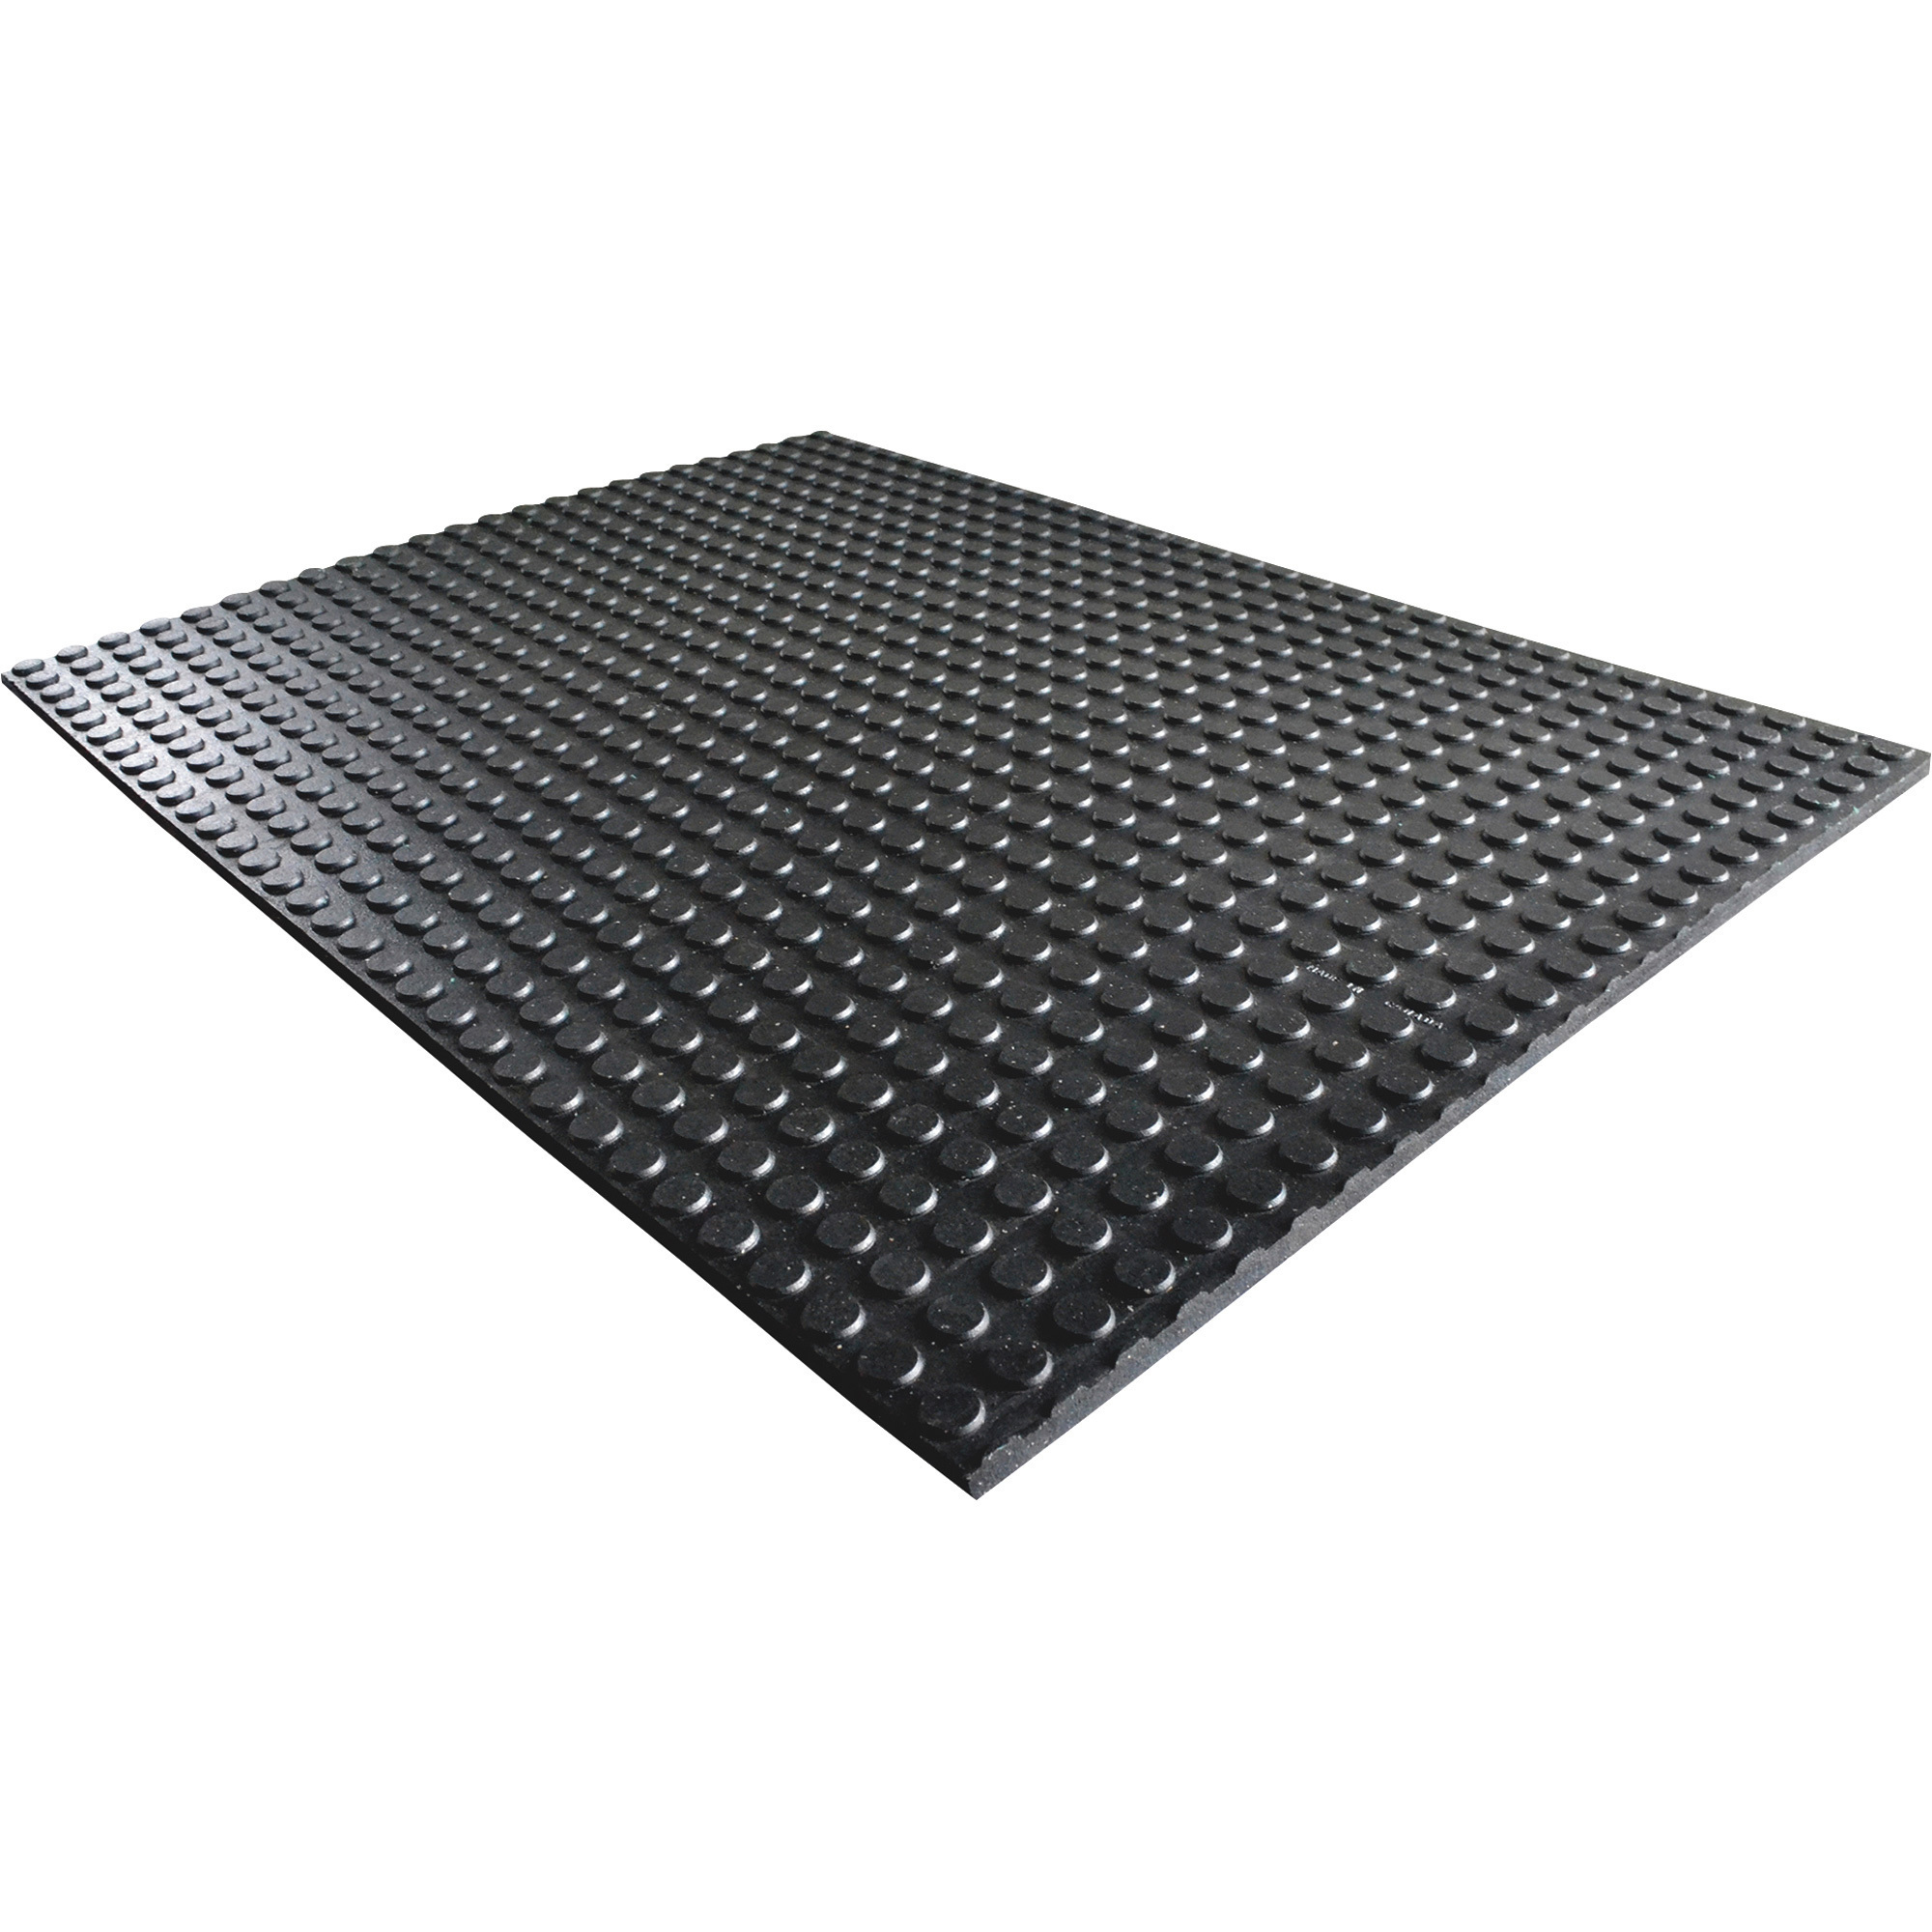 Choice 3' x 3' Black Rubber Connectable Anti-Fatigue Floor Mat - 1